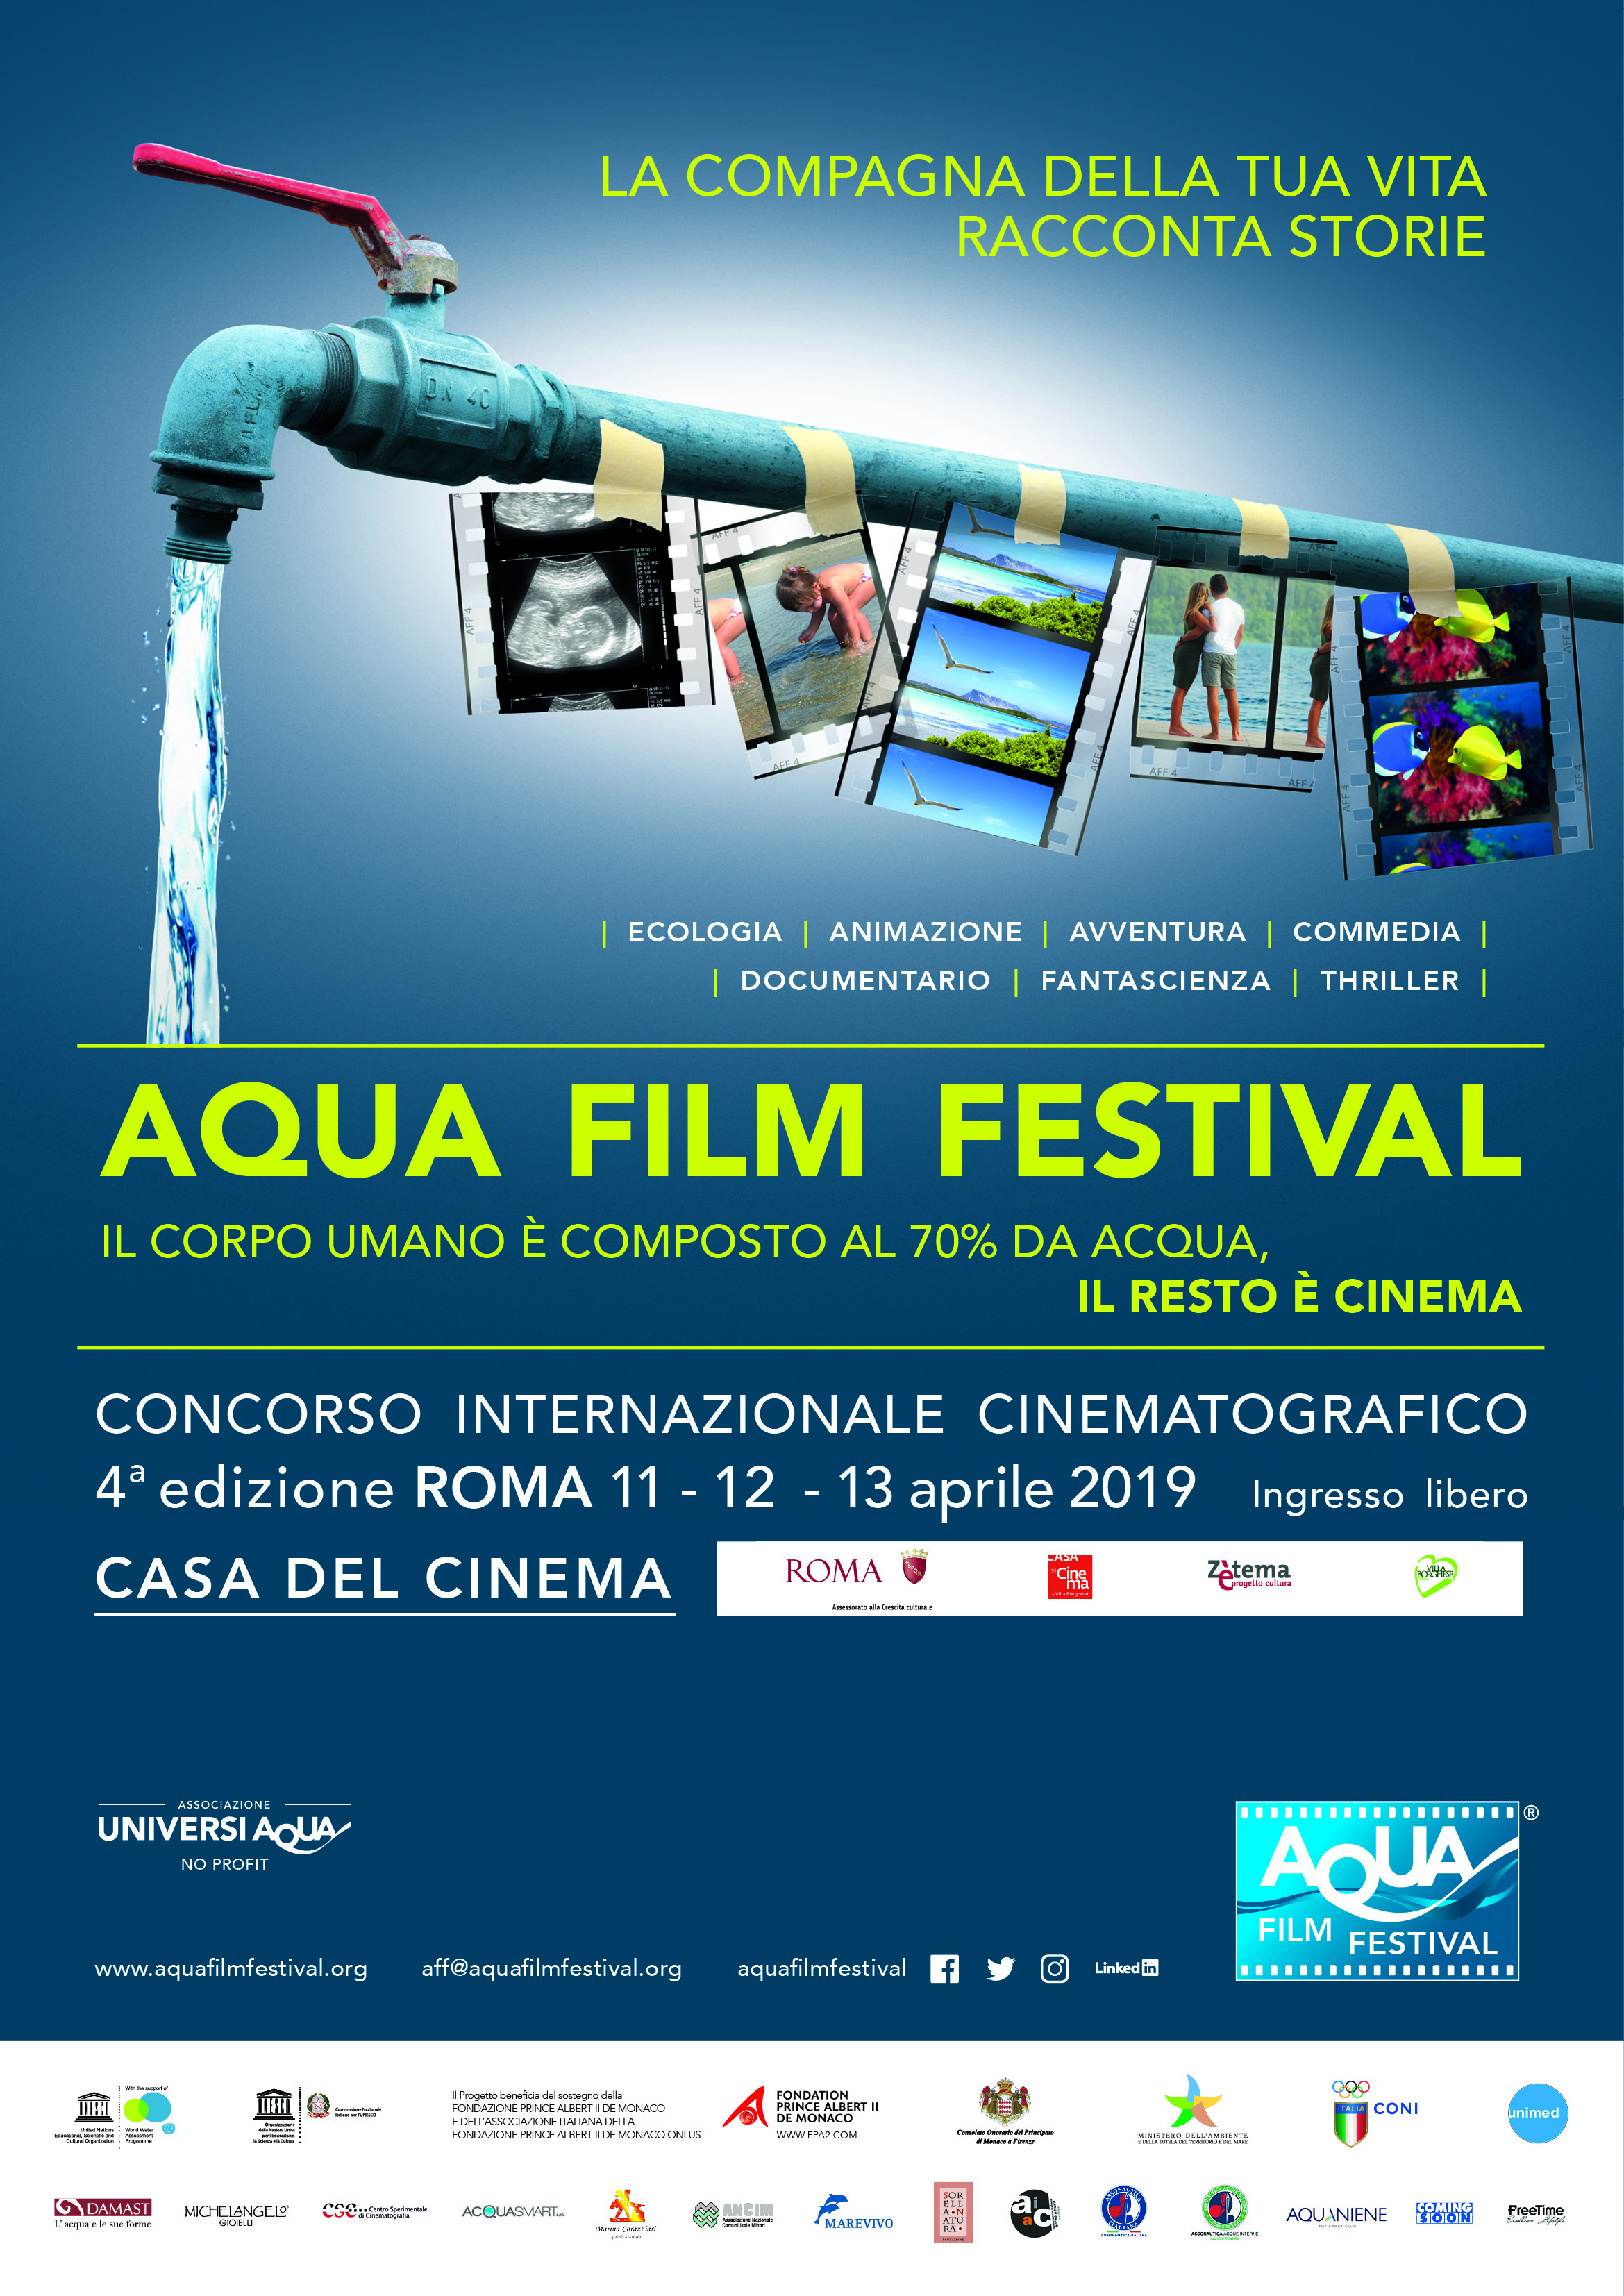 Aqua Film Festival